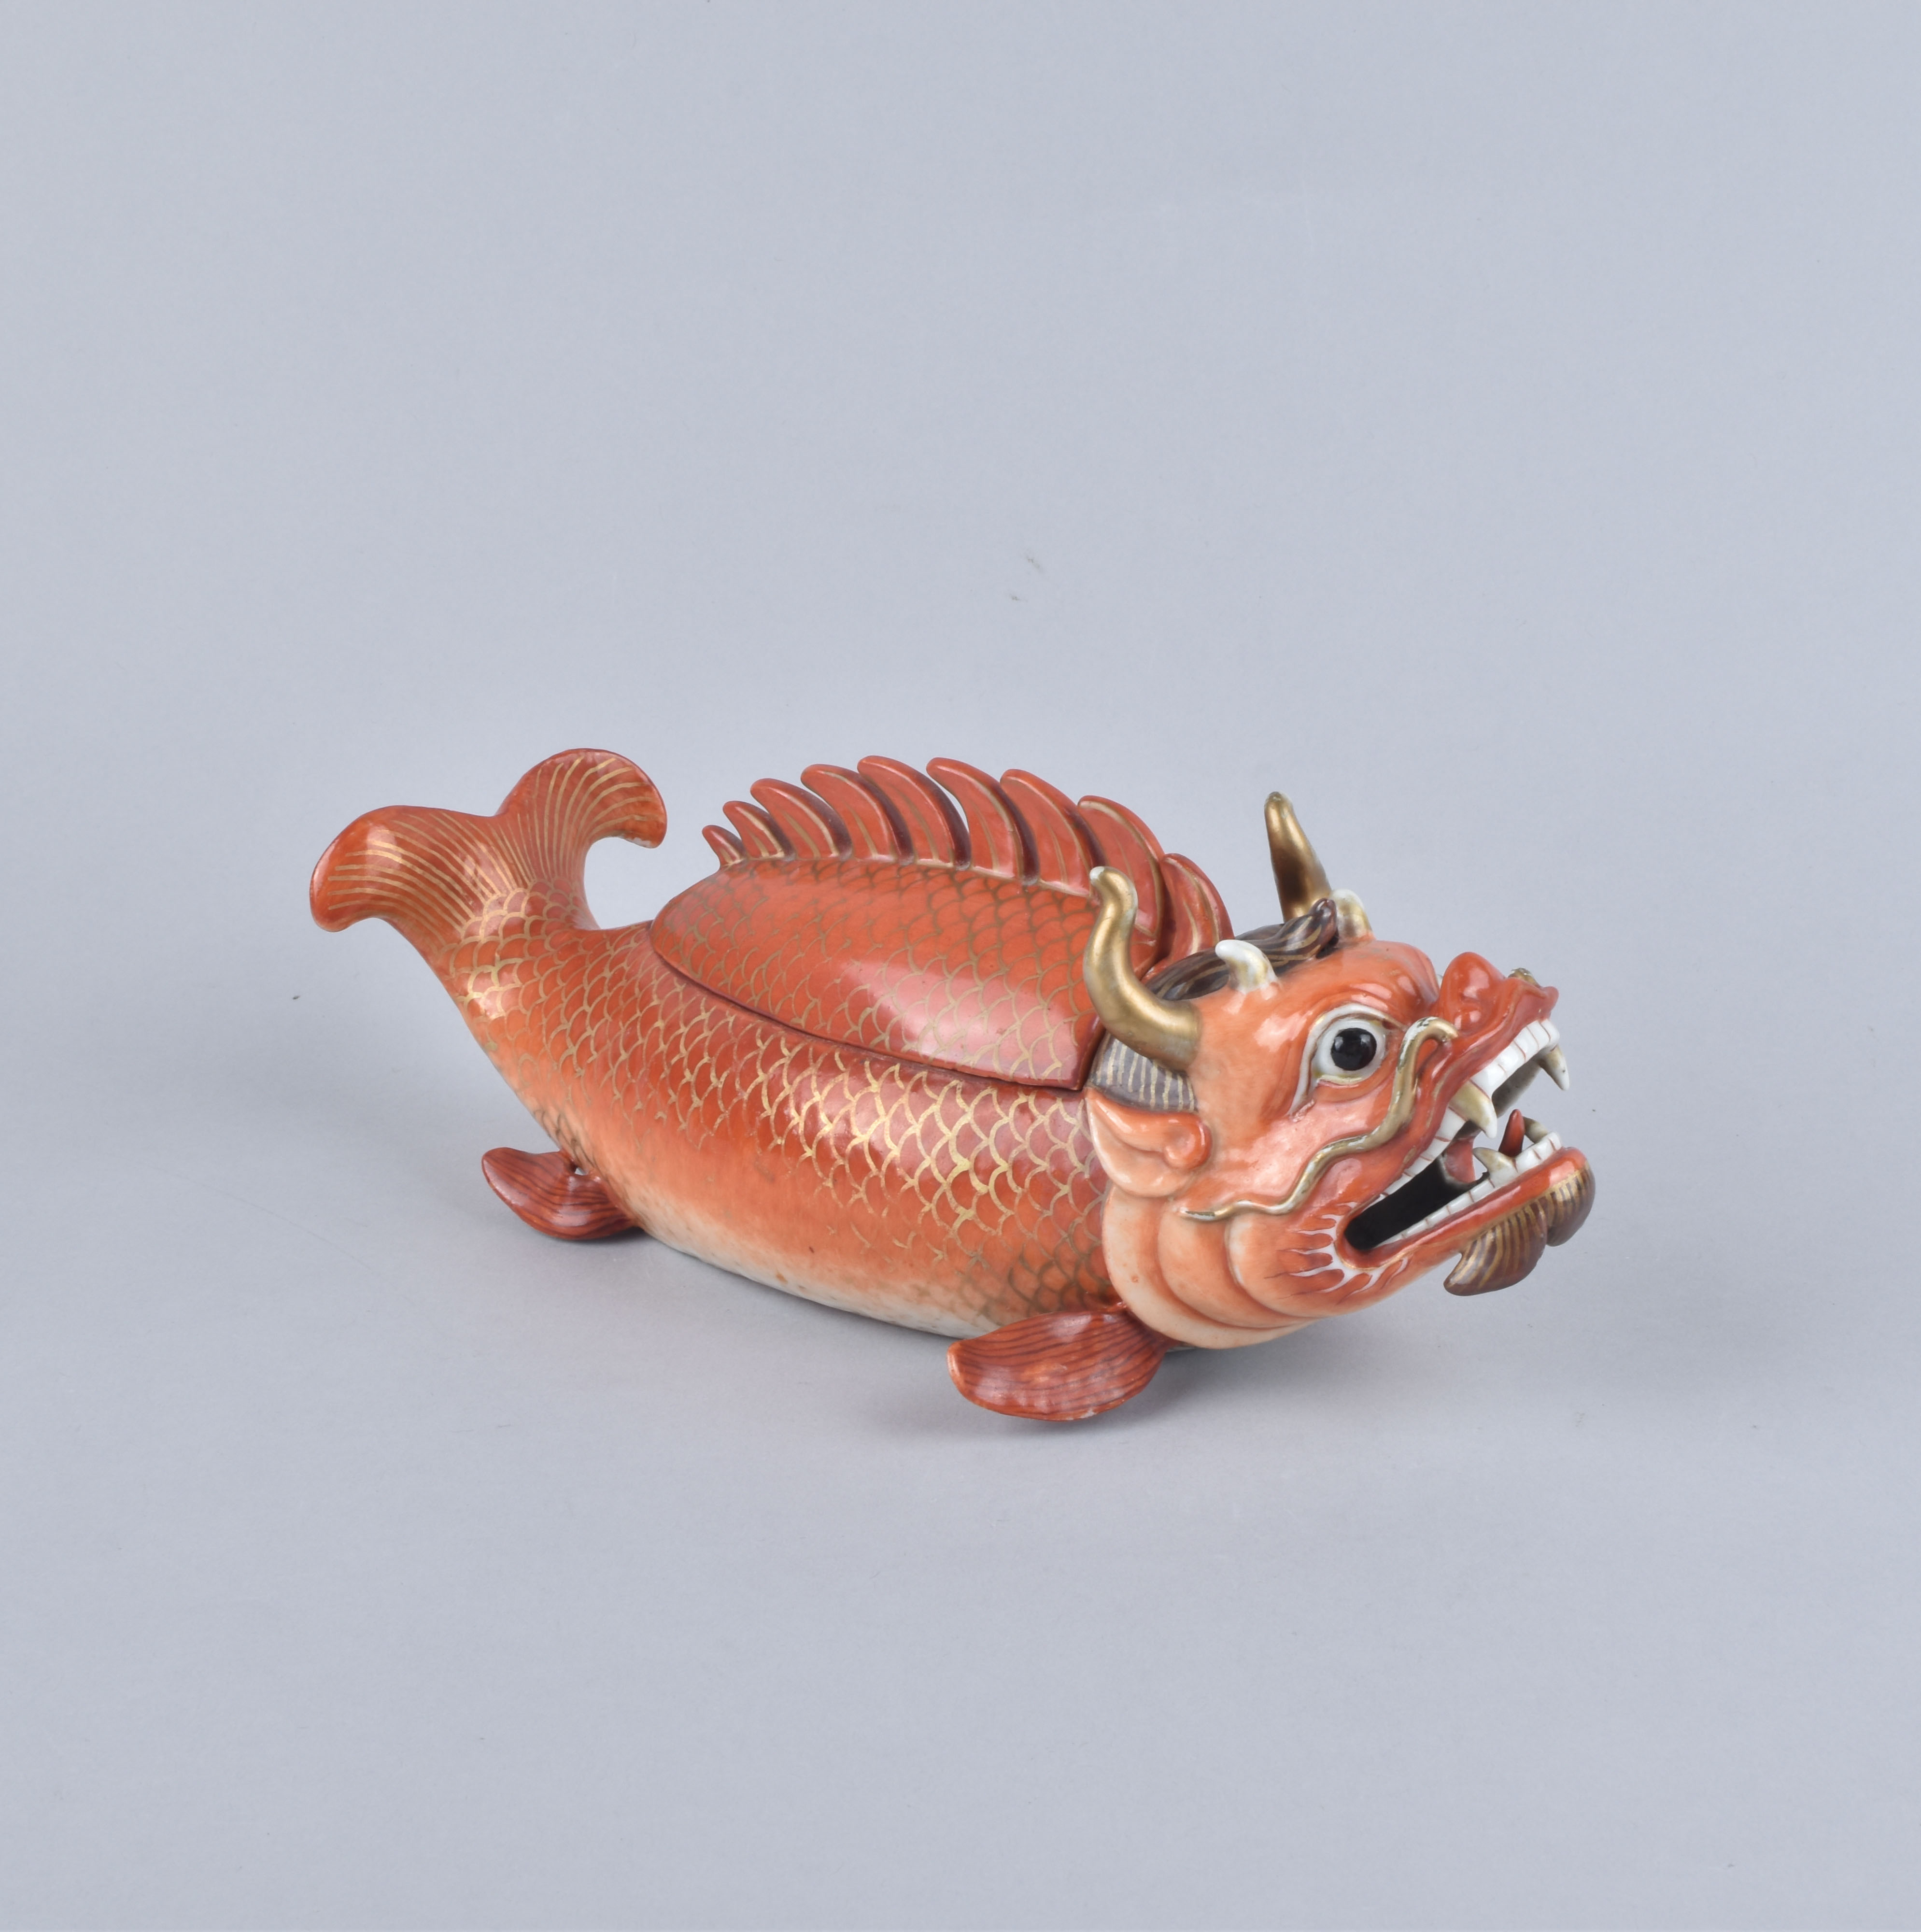 Porcelaine Qianlong (1735-1795), circa 1770, Chine